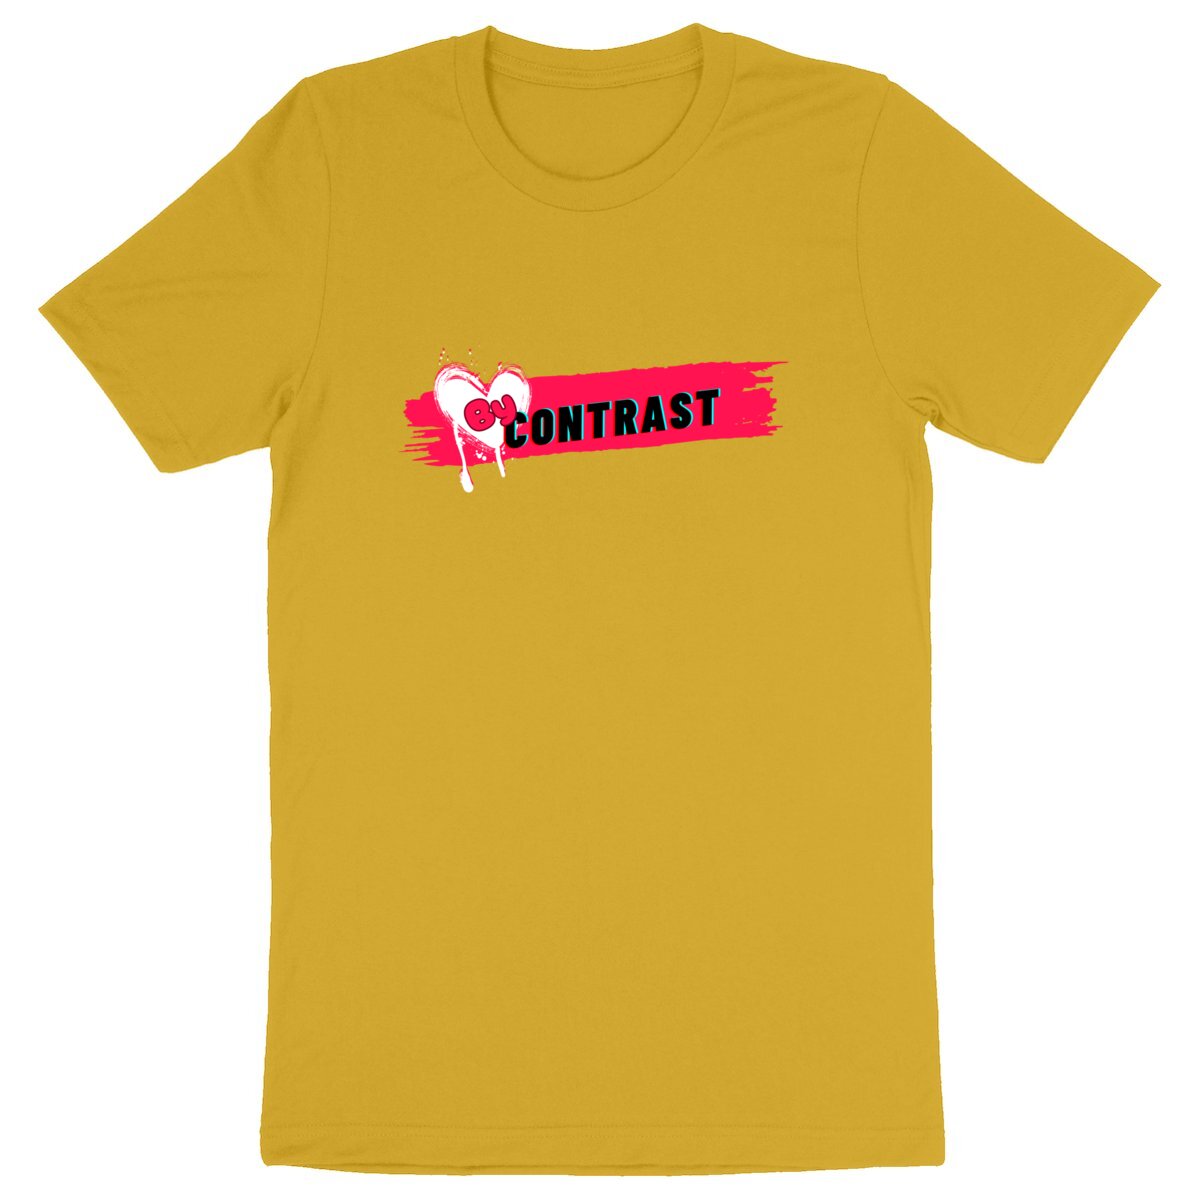 ByContrast - ByBrand | Heavyweight Unisex t-shirt - Premium Plus